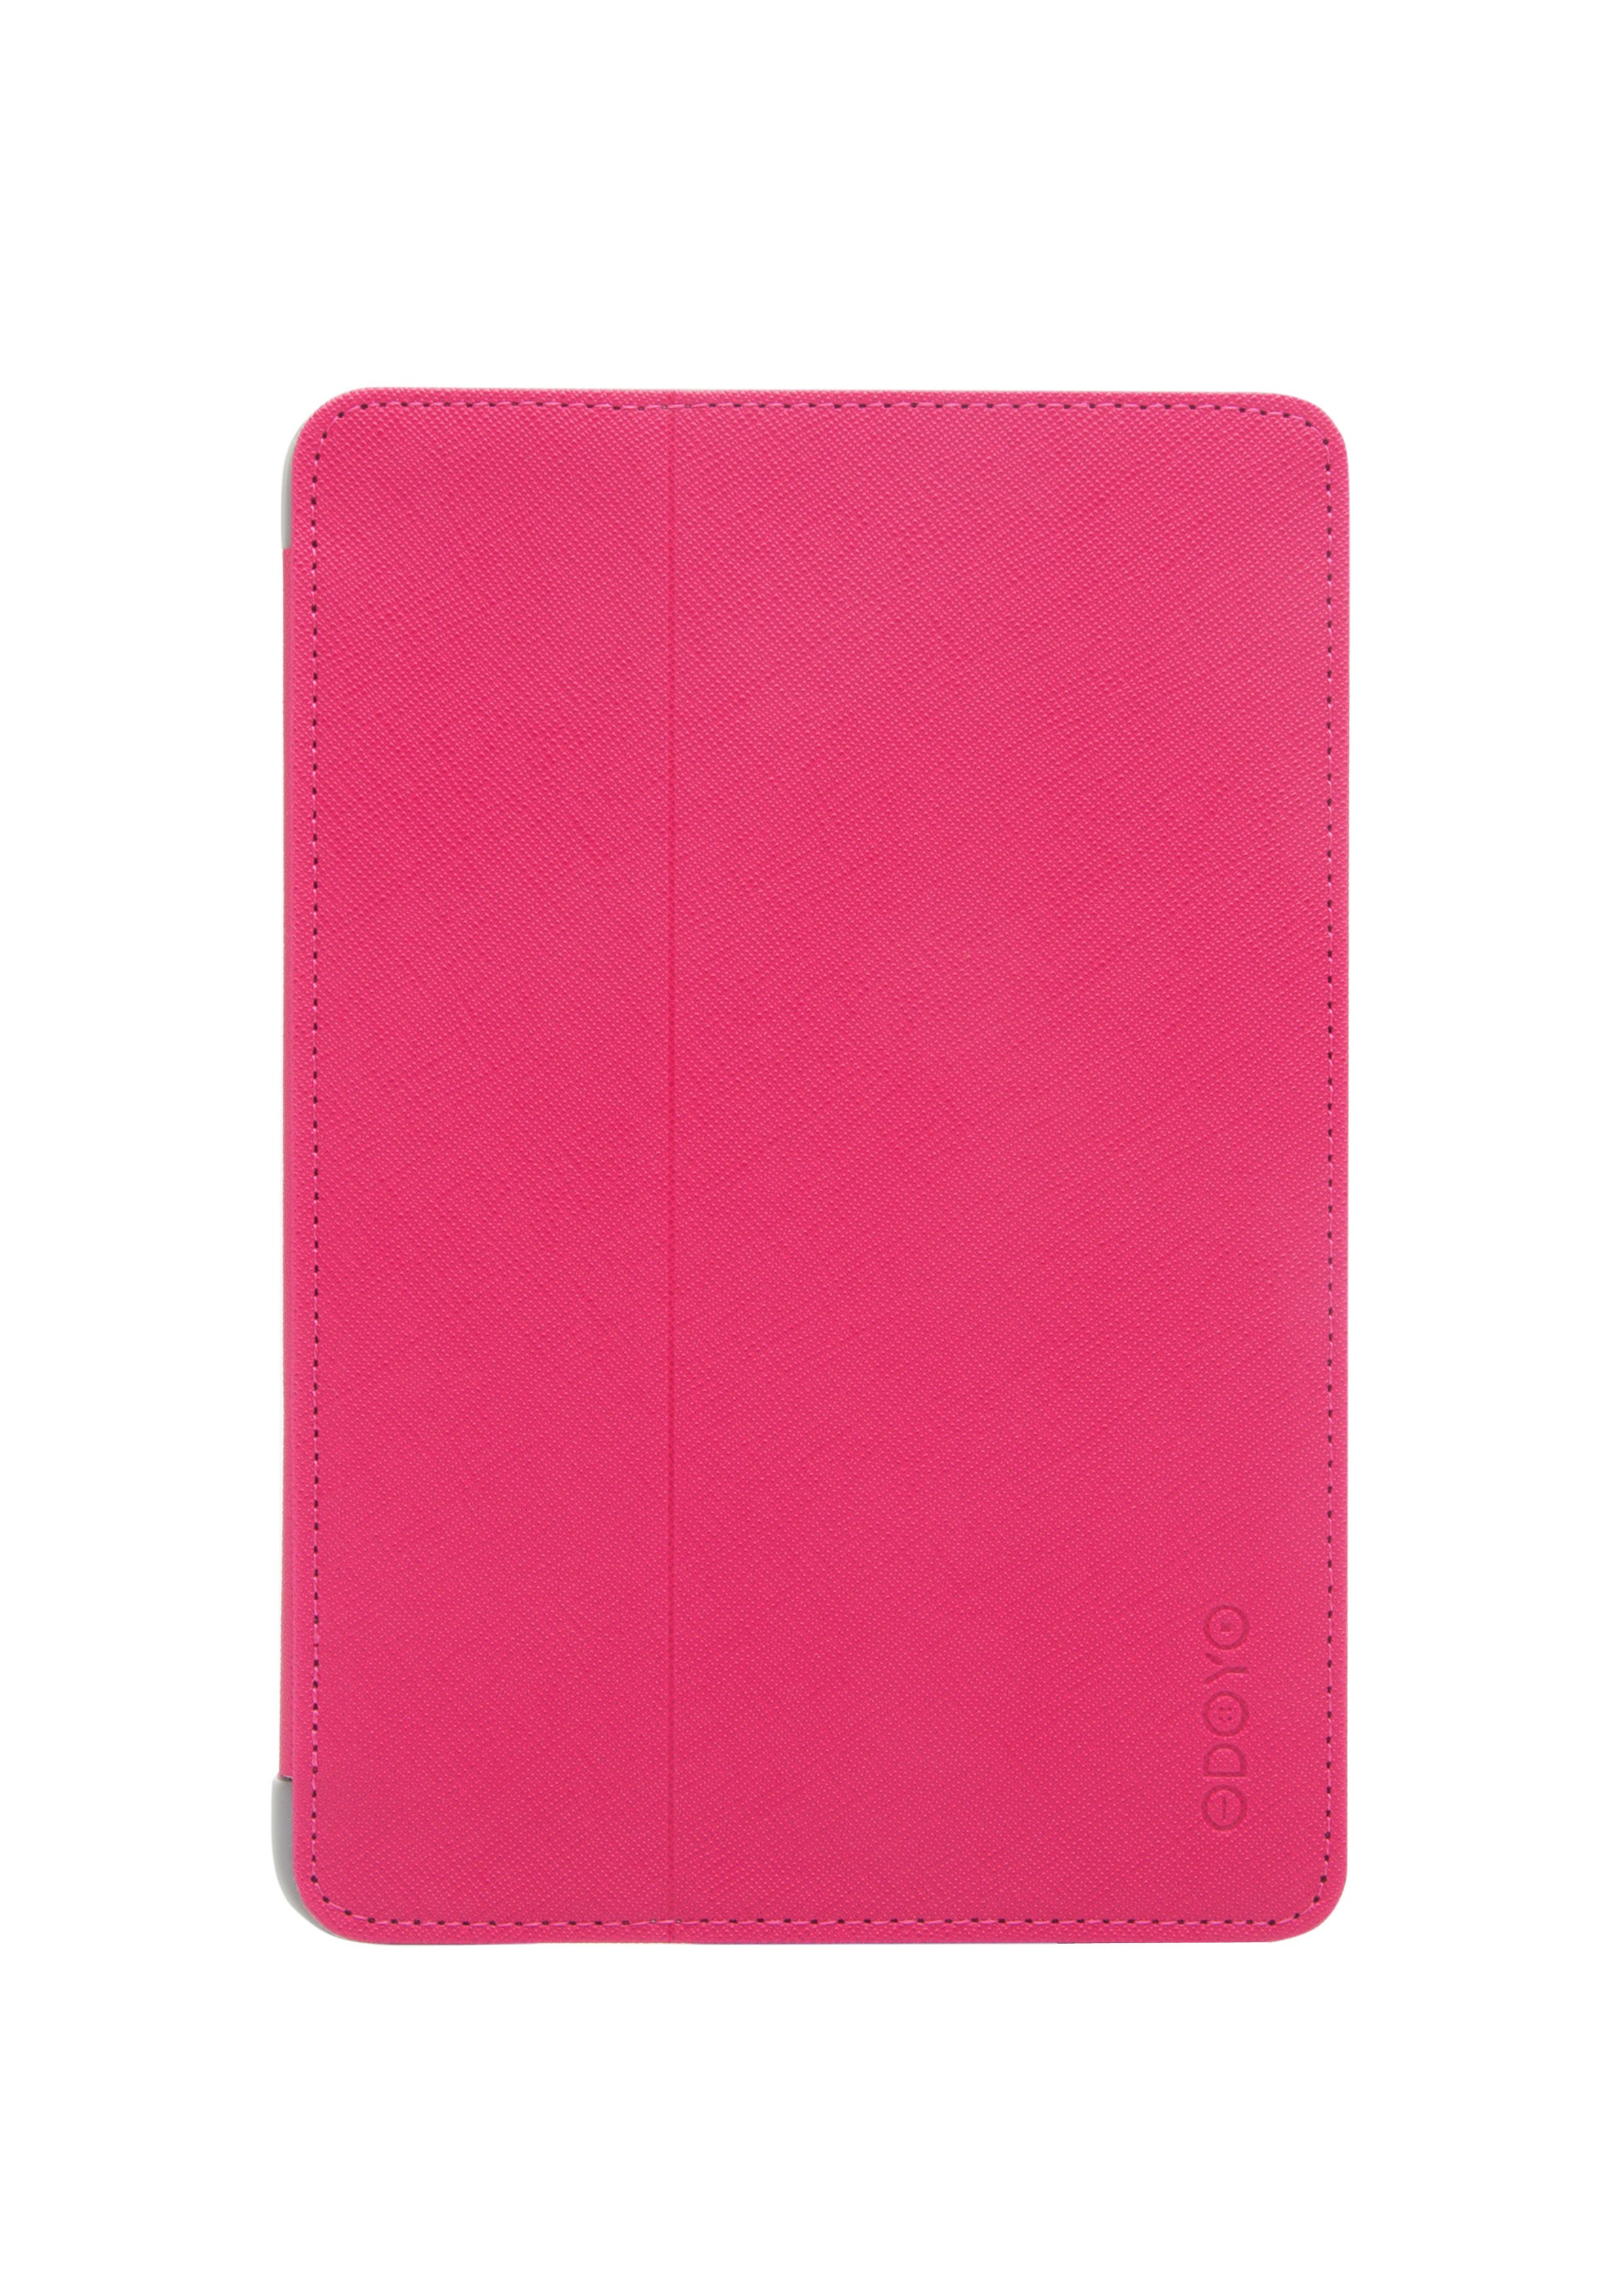 Odoyo Air Coat for iPad Mini with Retina Display - Pink.